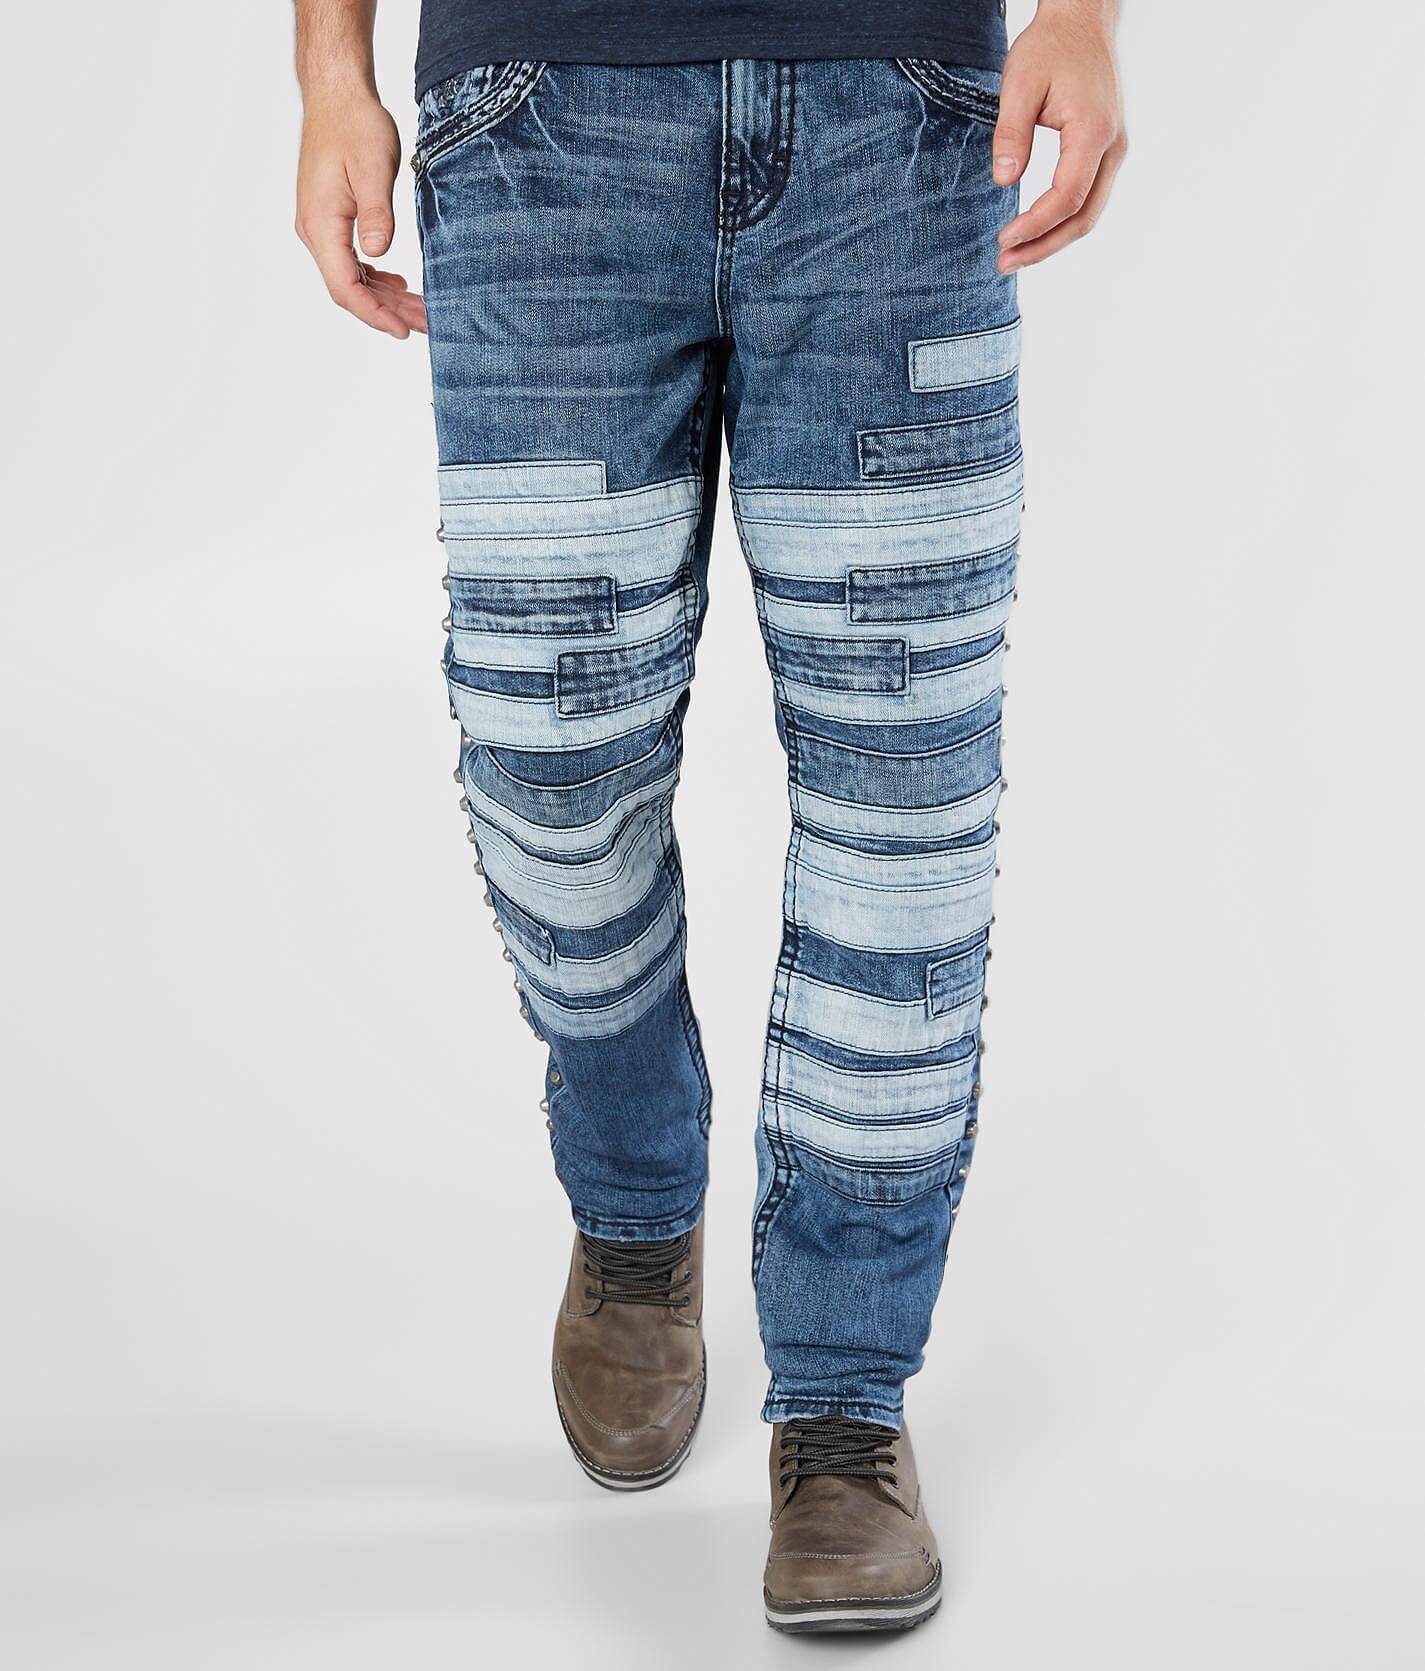 buckle jeans mens sale